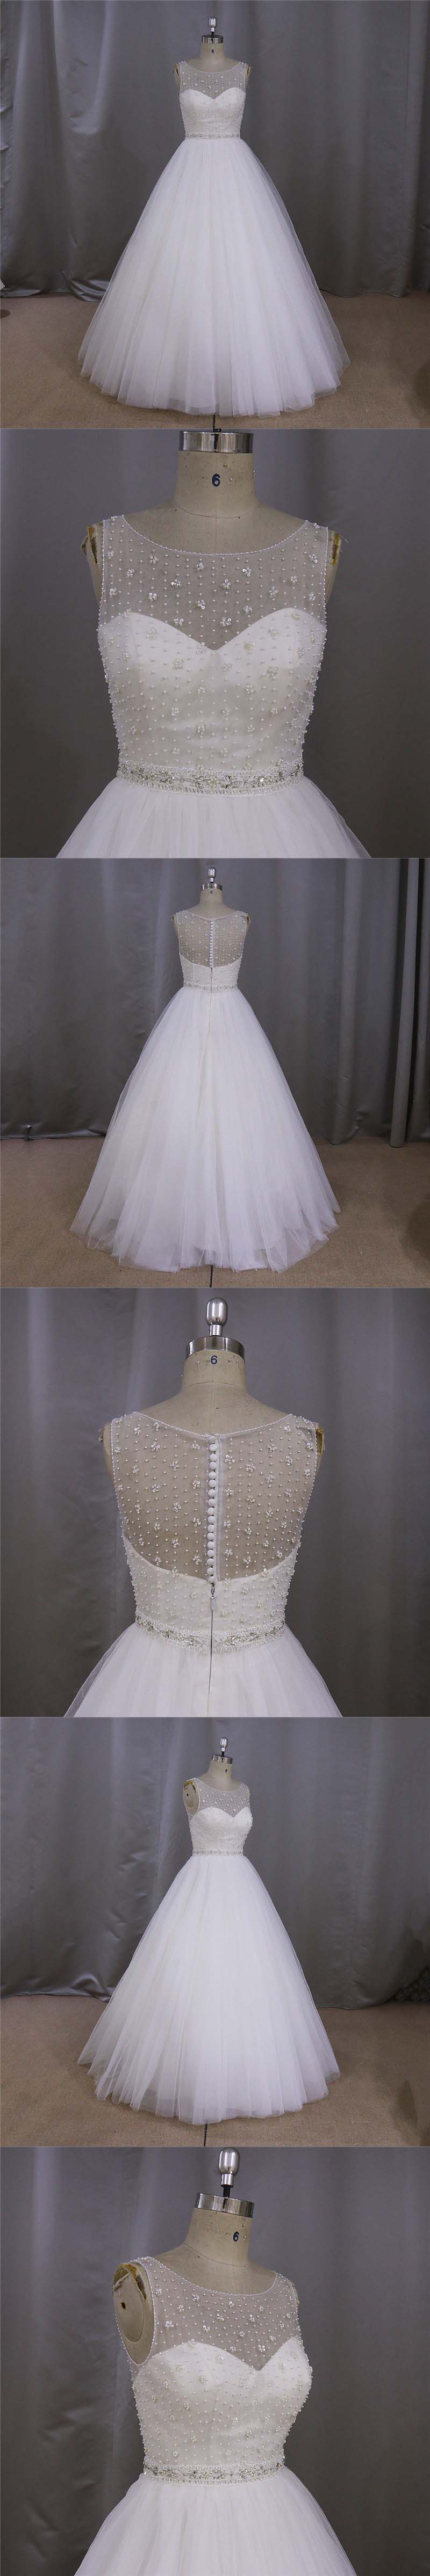 2016 Romantic Sweetheart Lace Bridal Dresses